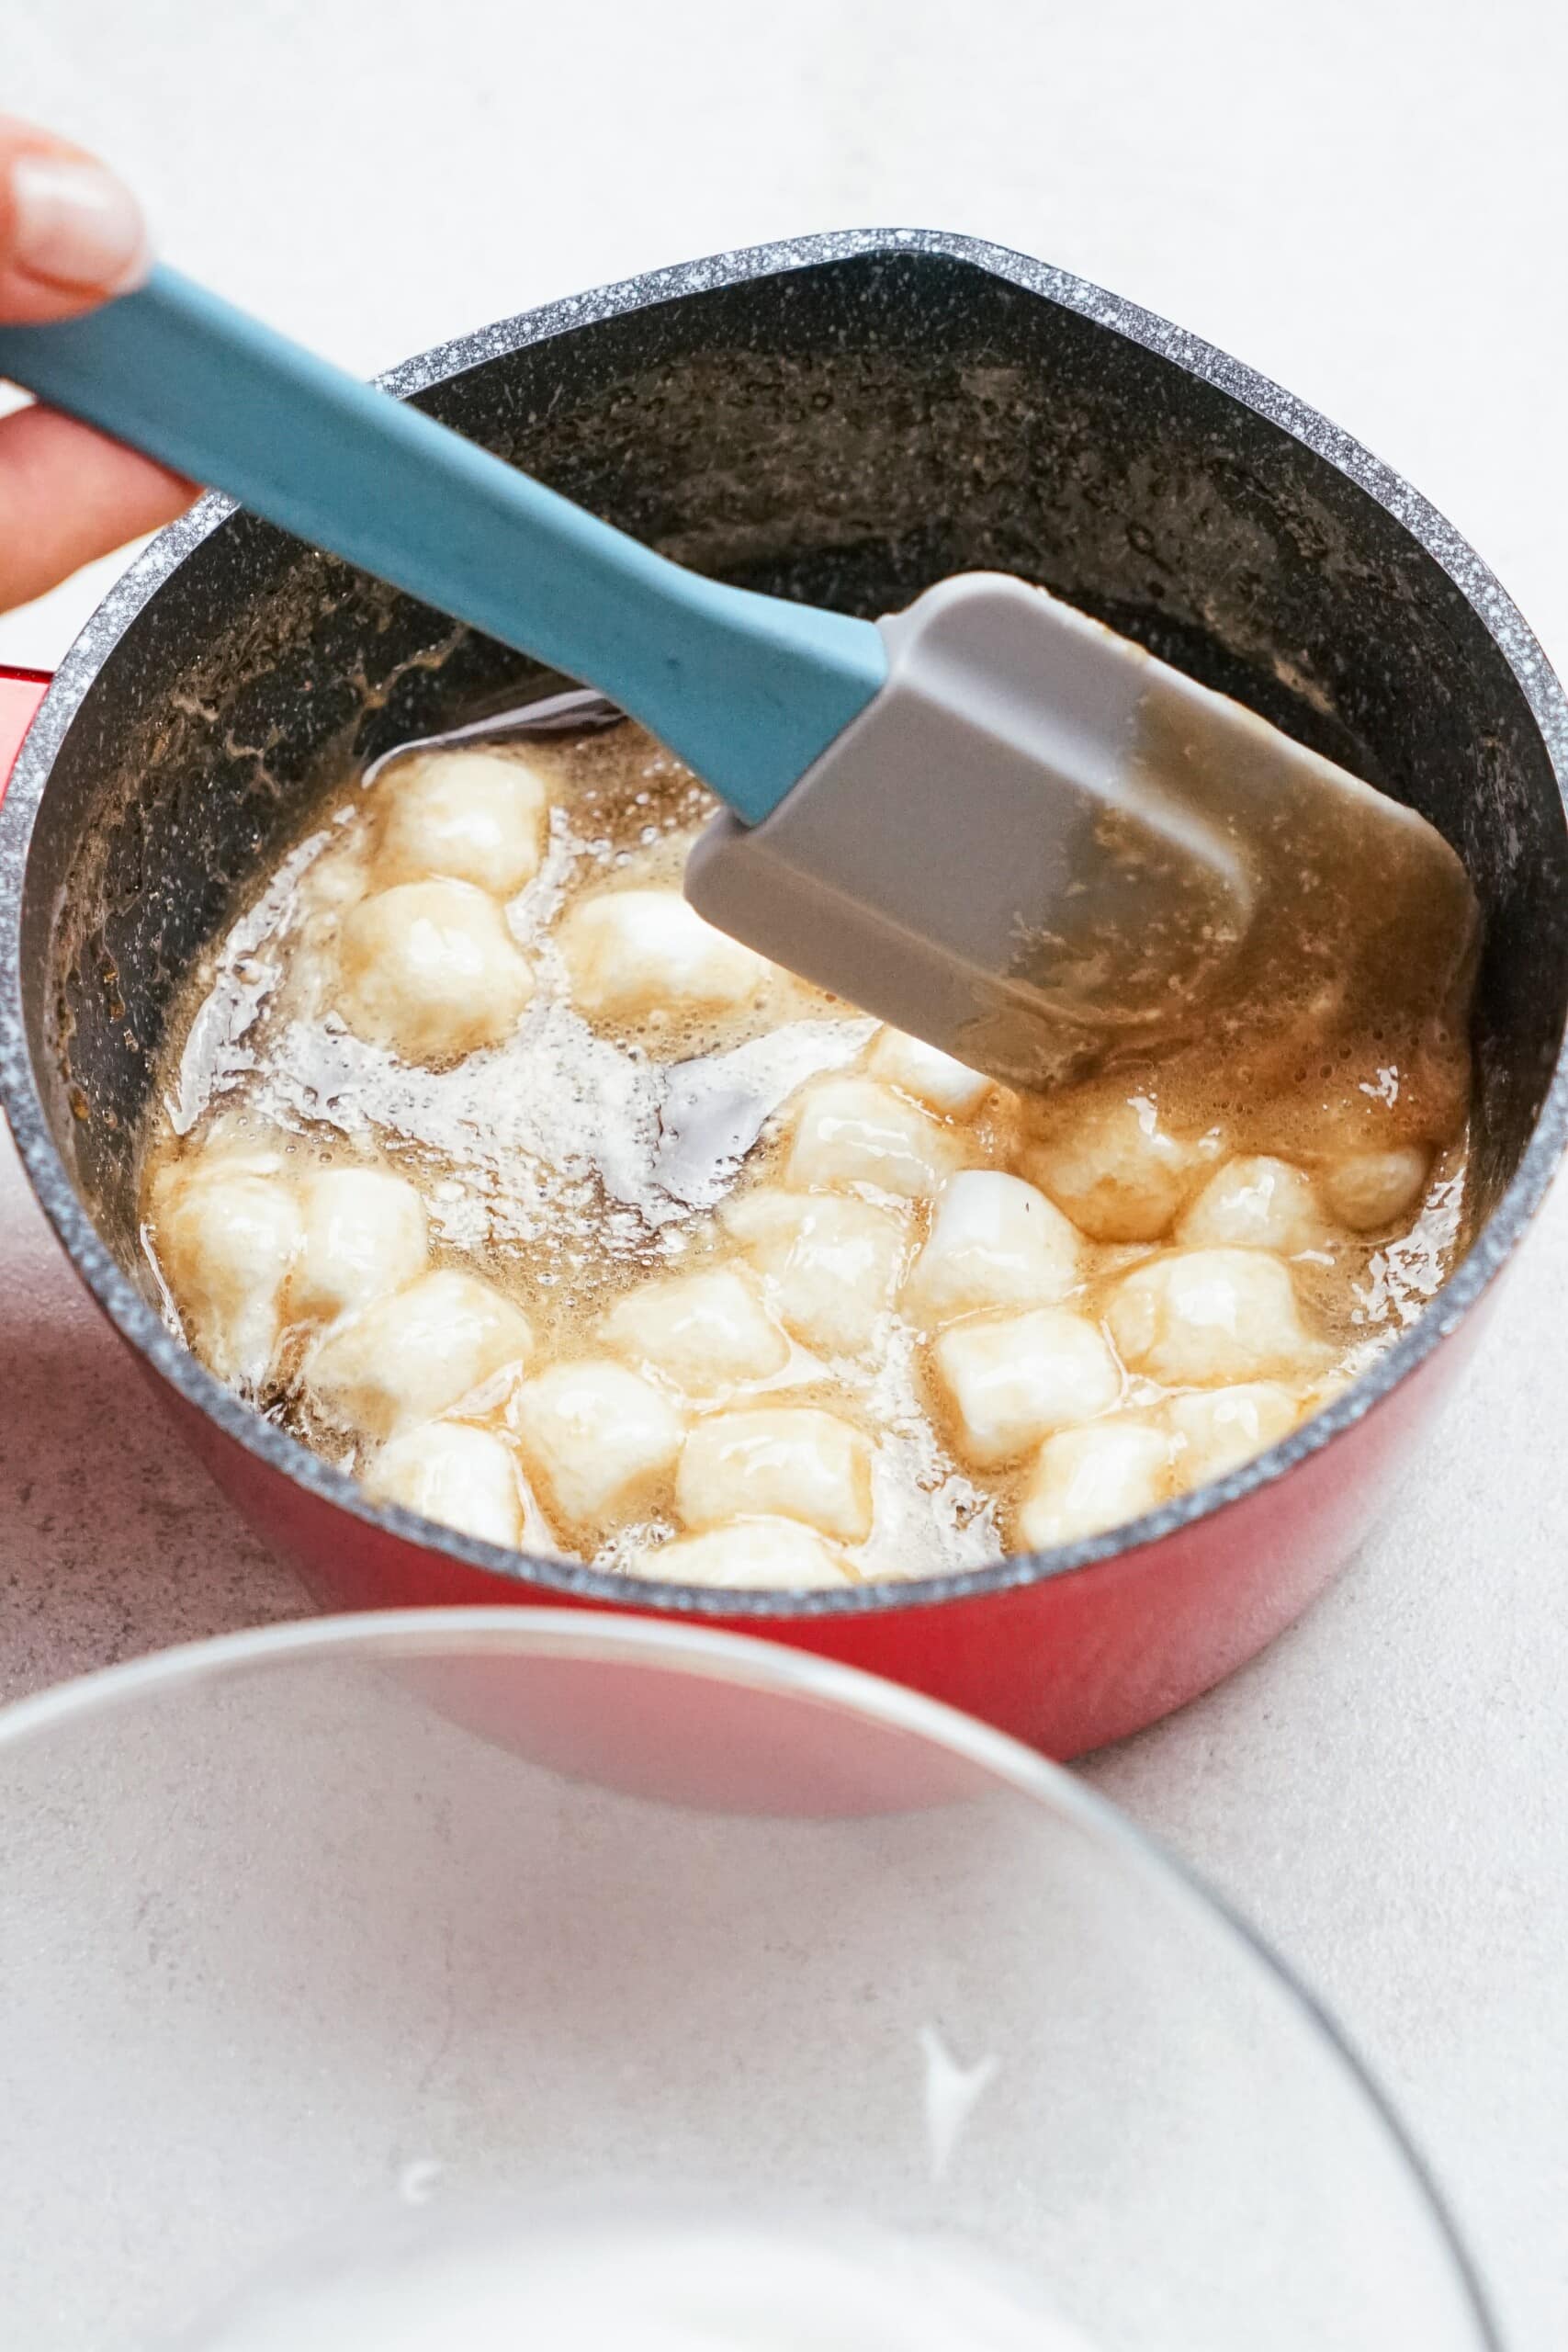 marshmallows melting in hot sugar mixture